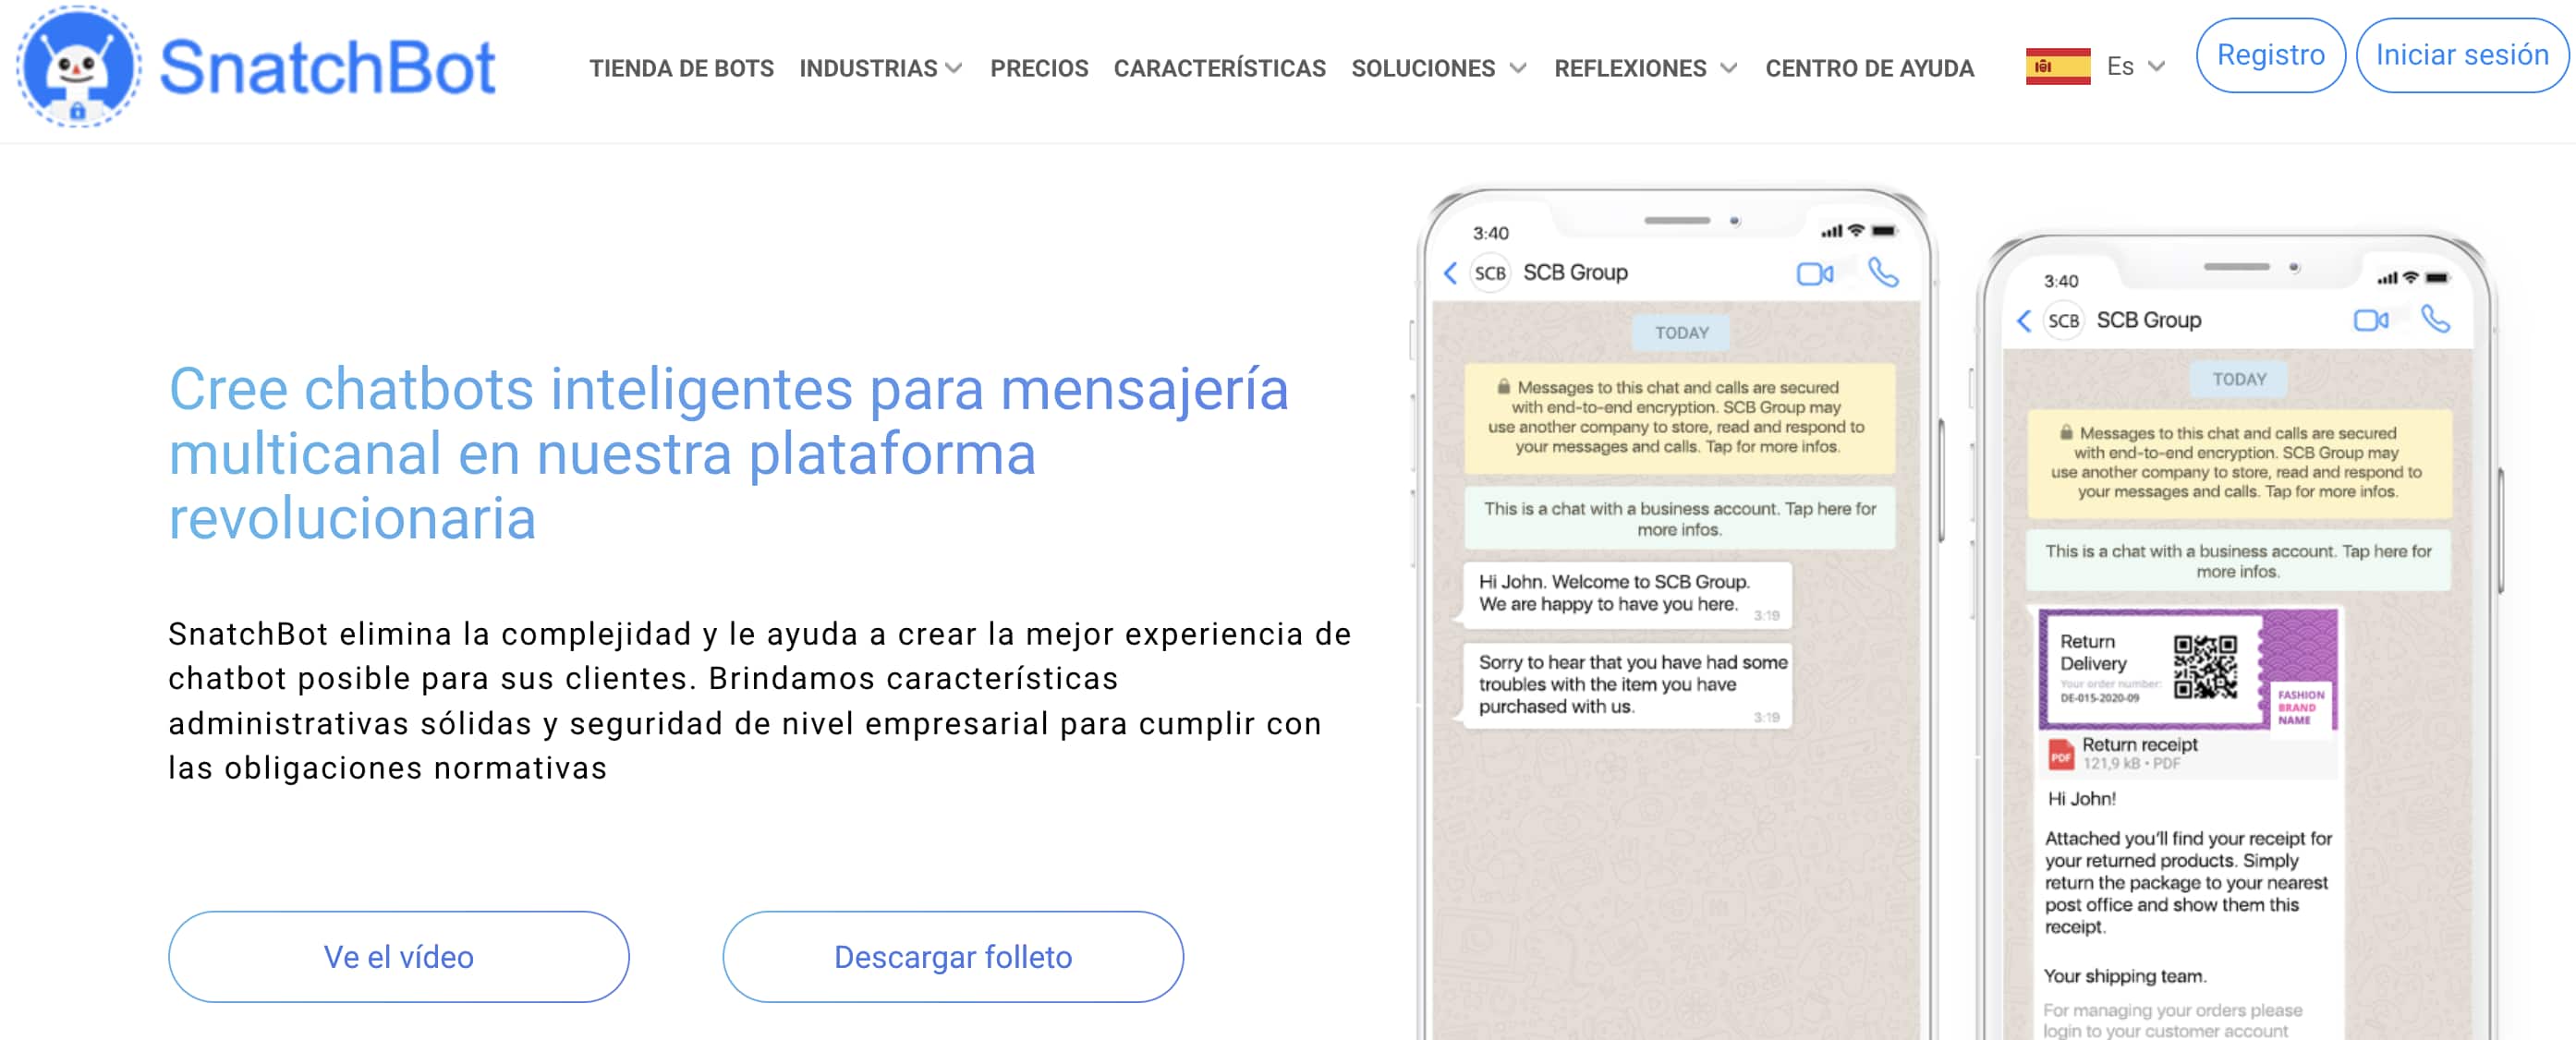 Mejores chatbots en español: SnatchBot